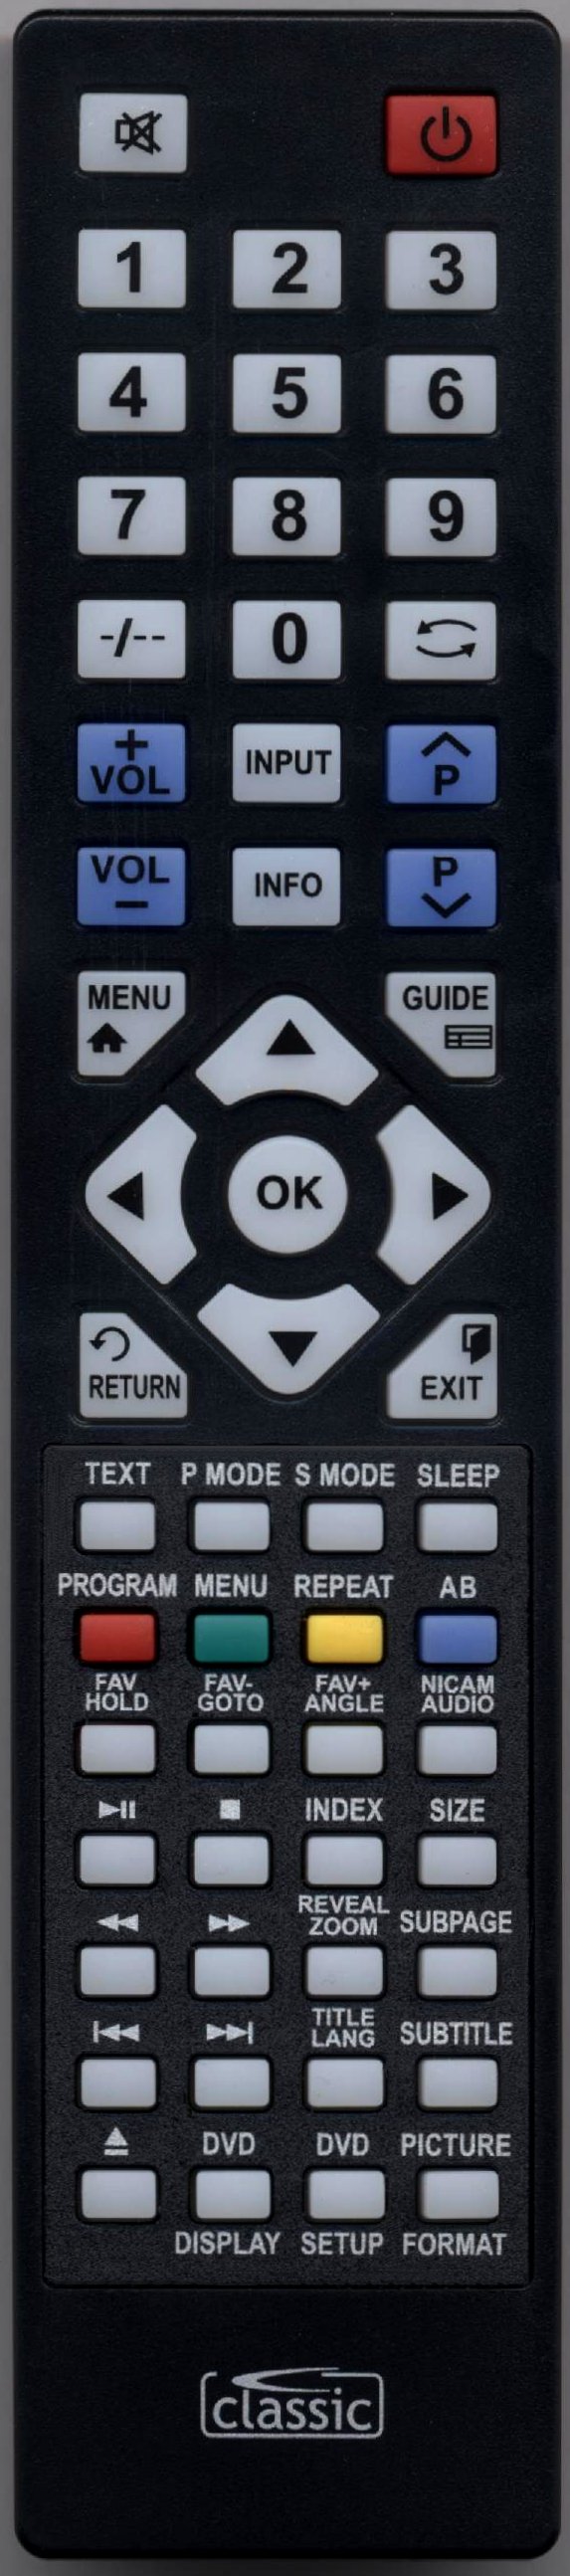 UMC X26/29-GB-TCD-UK Remote Control